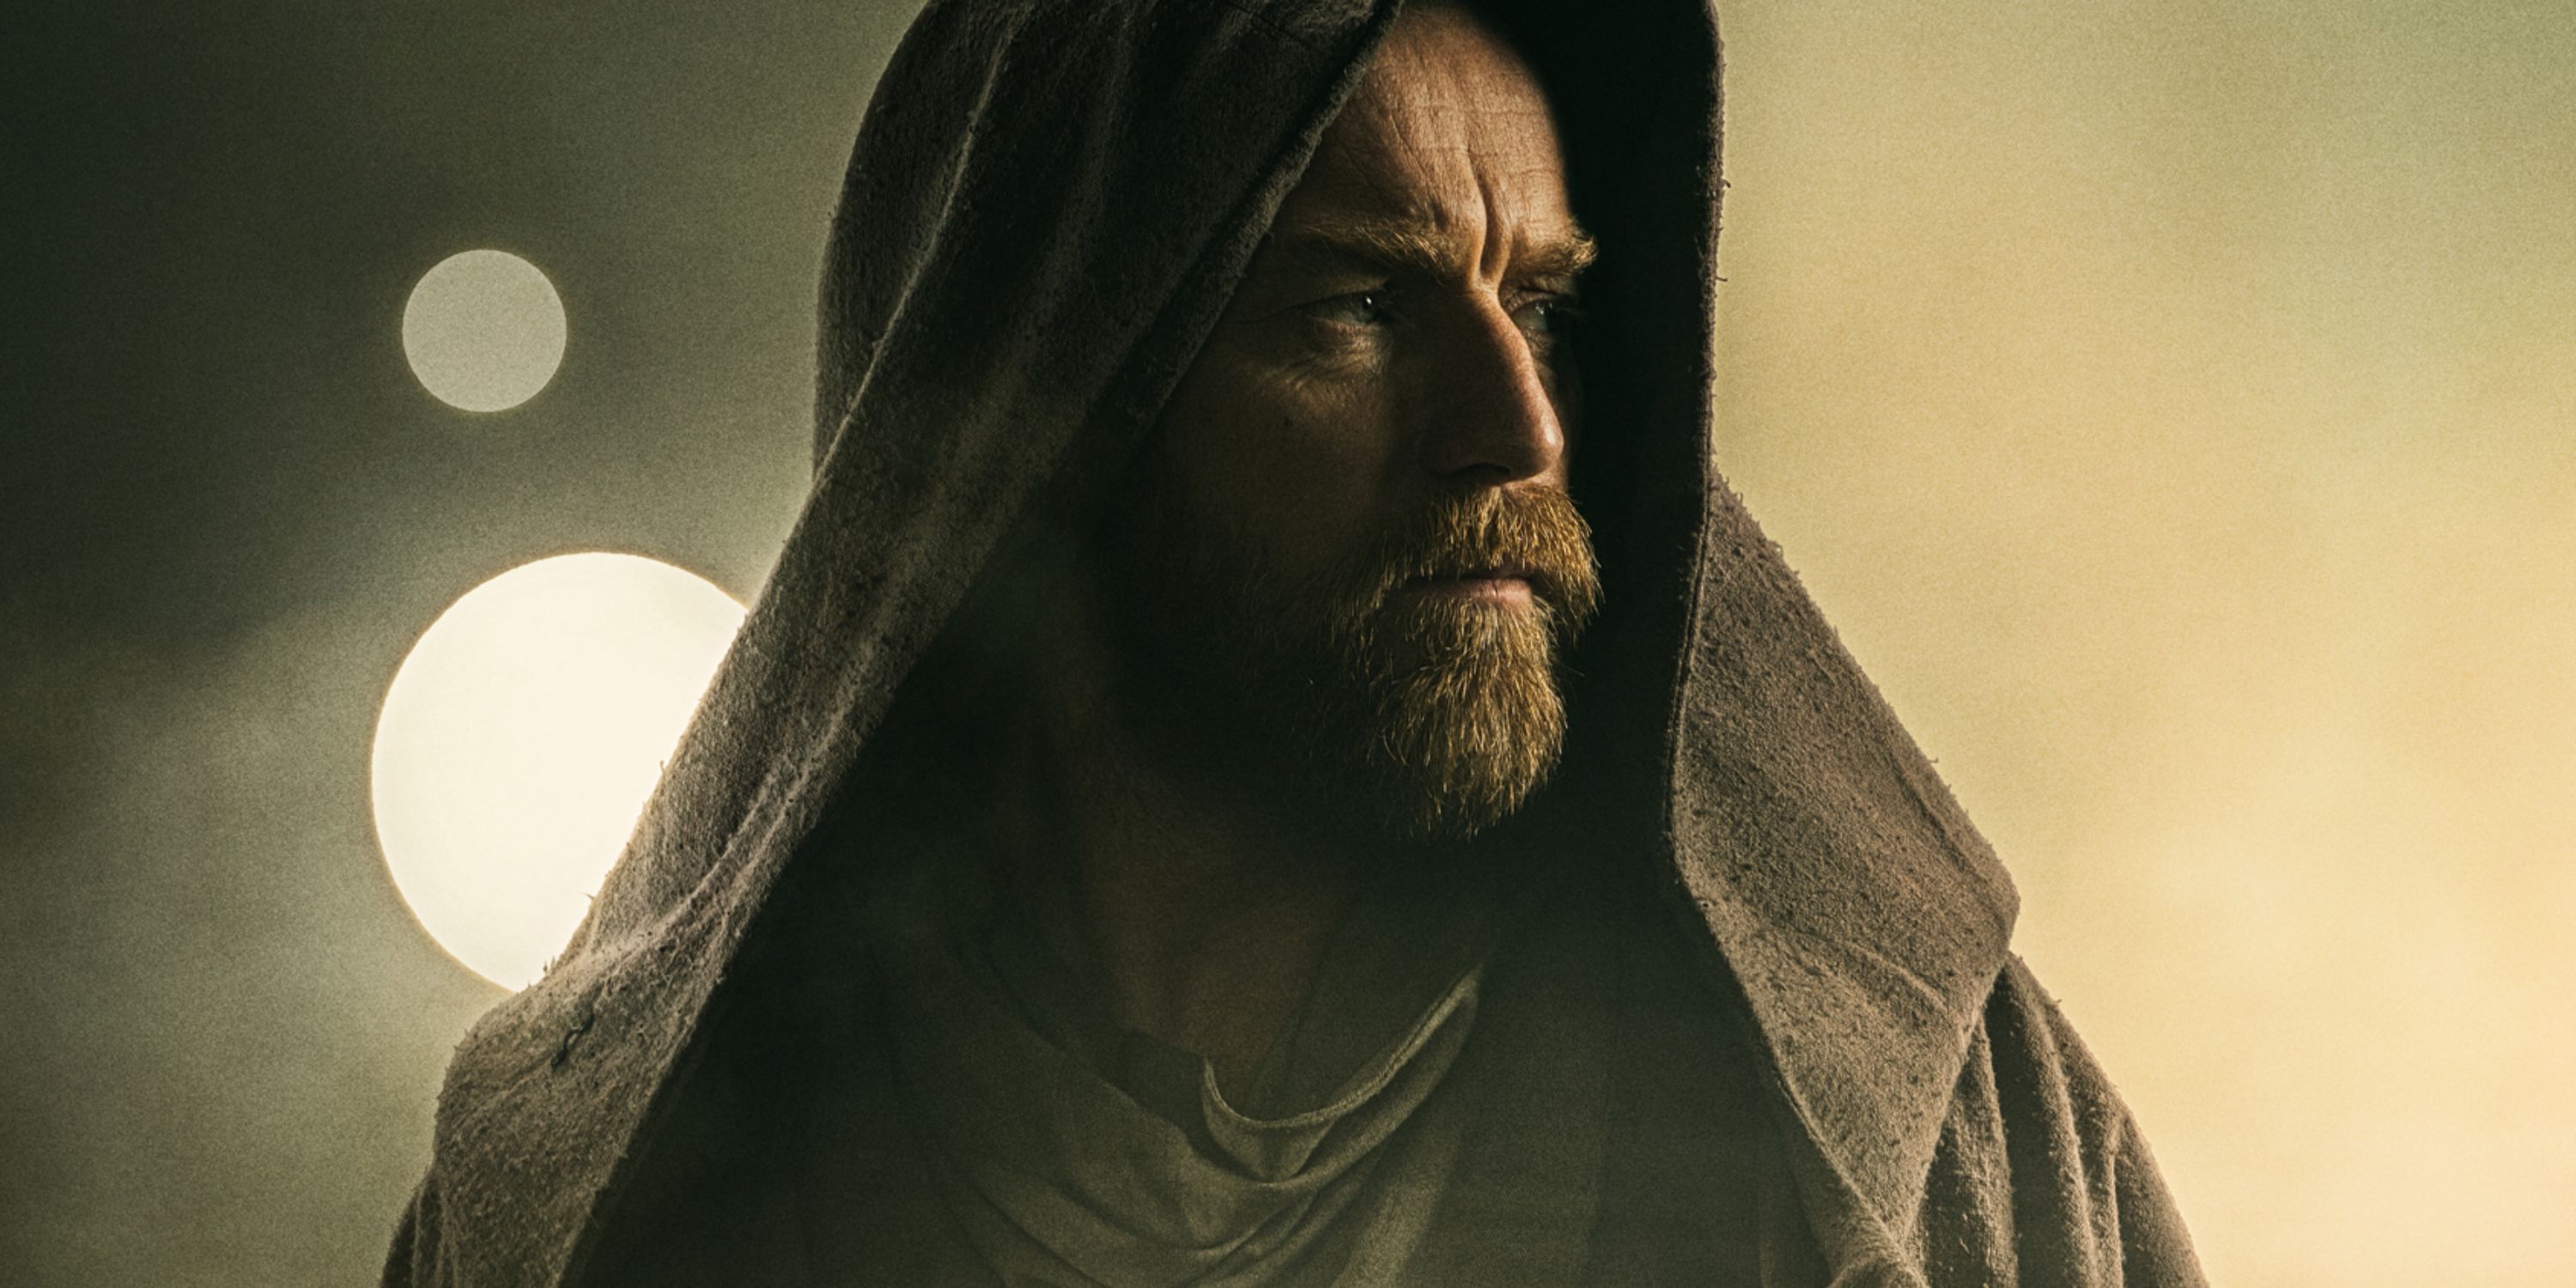 Ewan McGregor in Obi-Wan Kenobi Poster